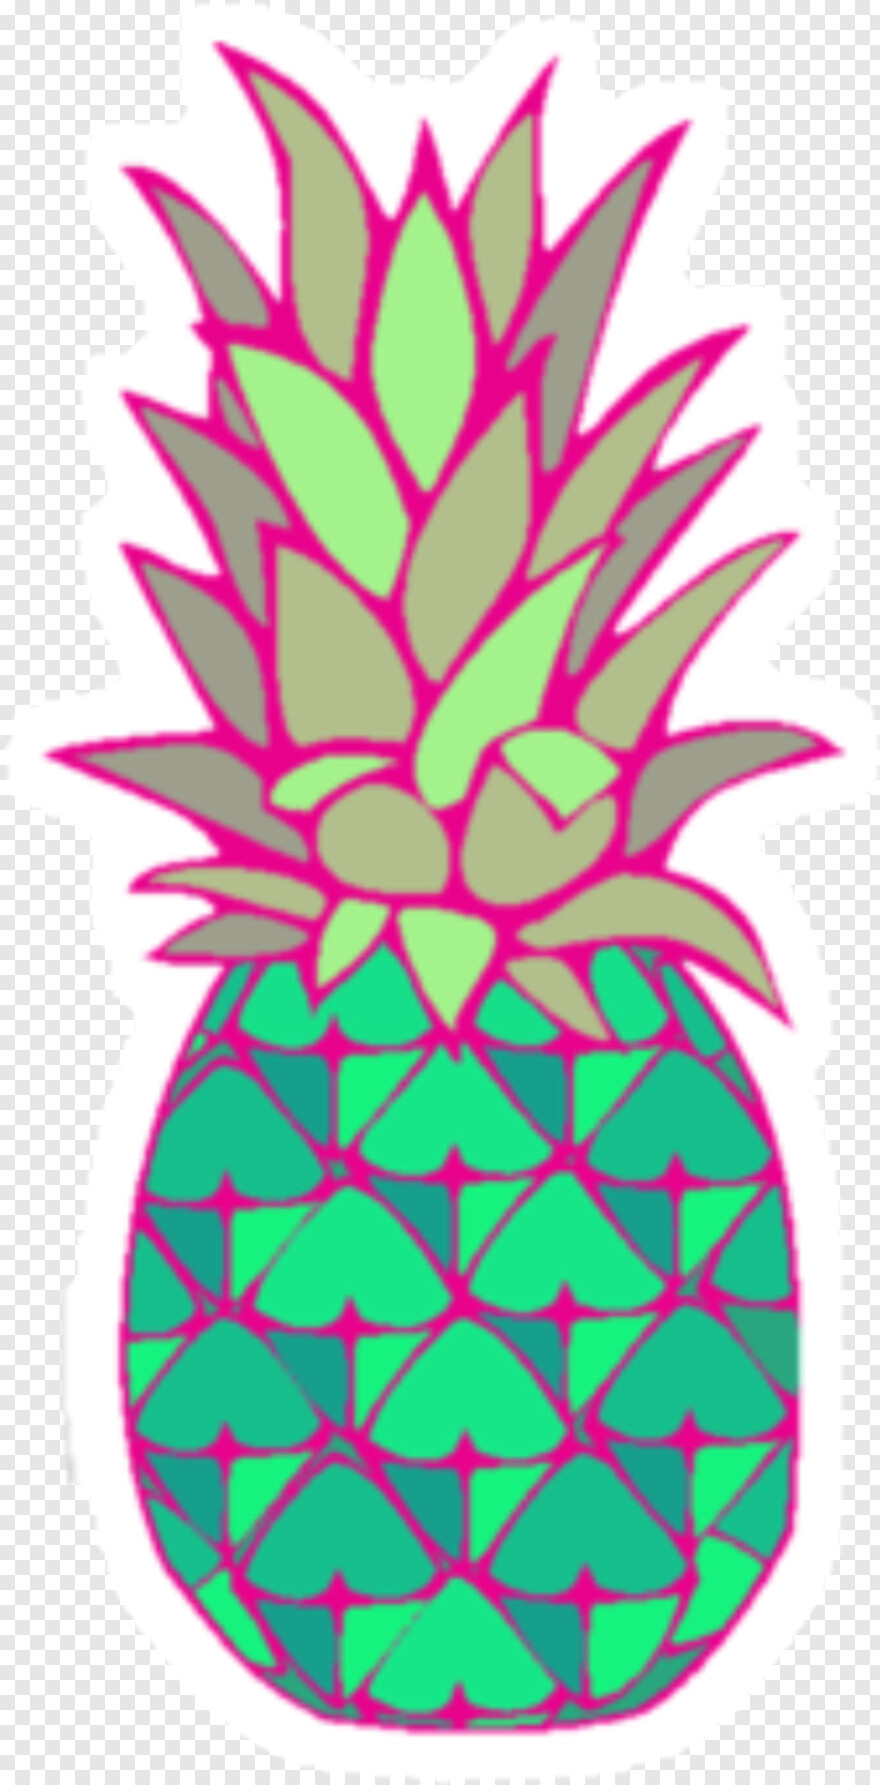 pineapple # 654188